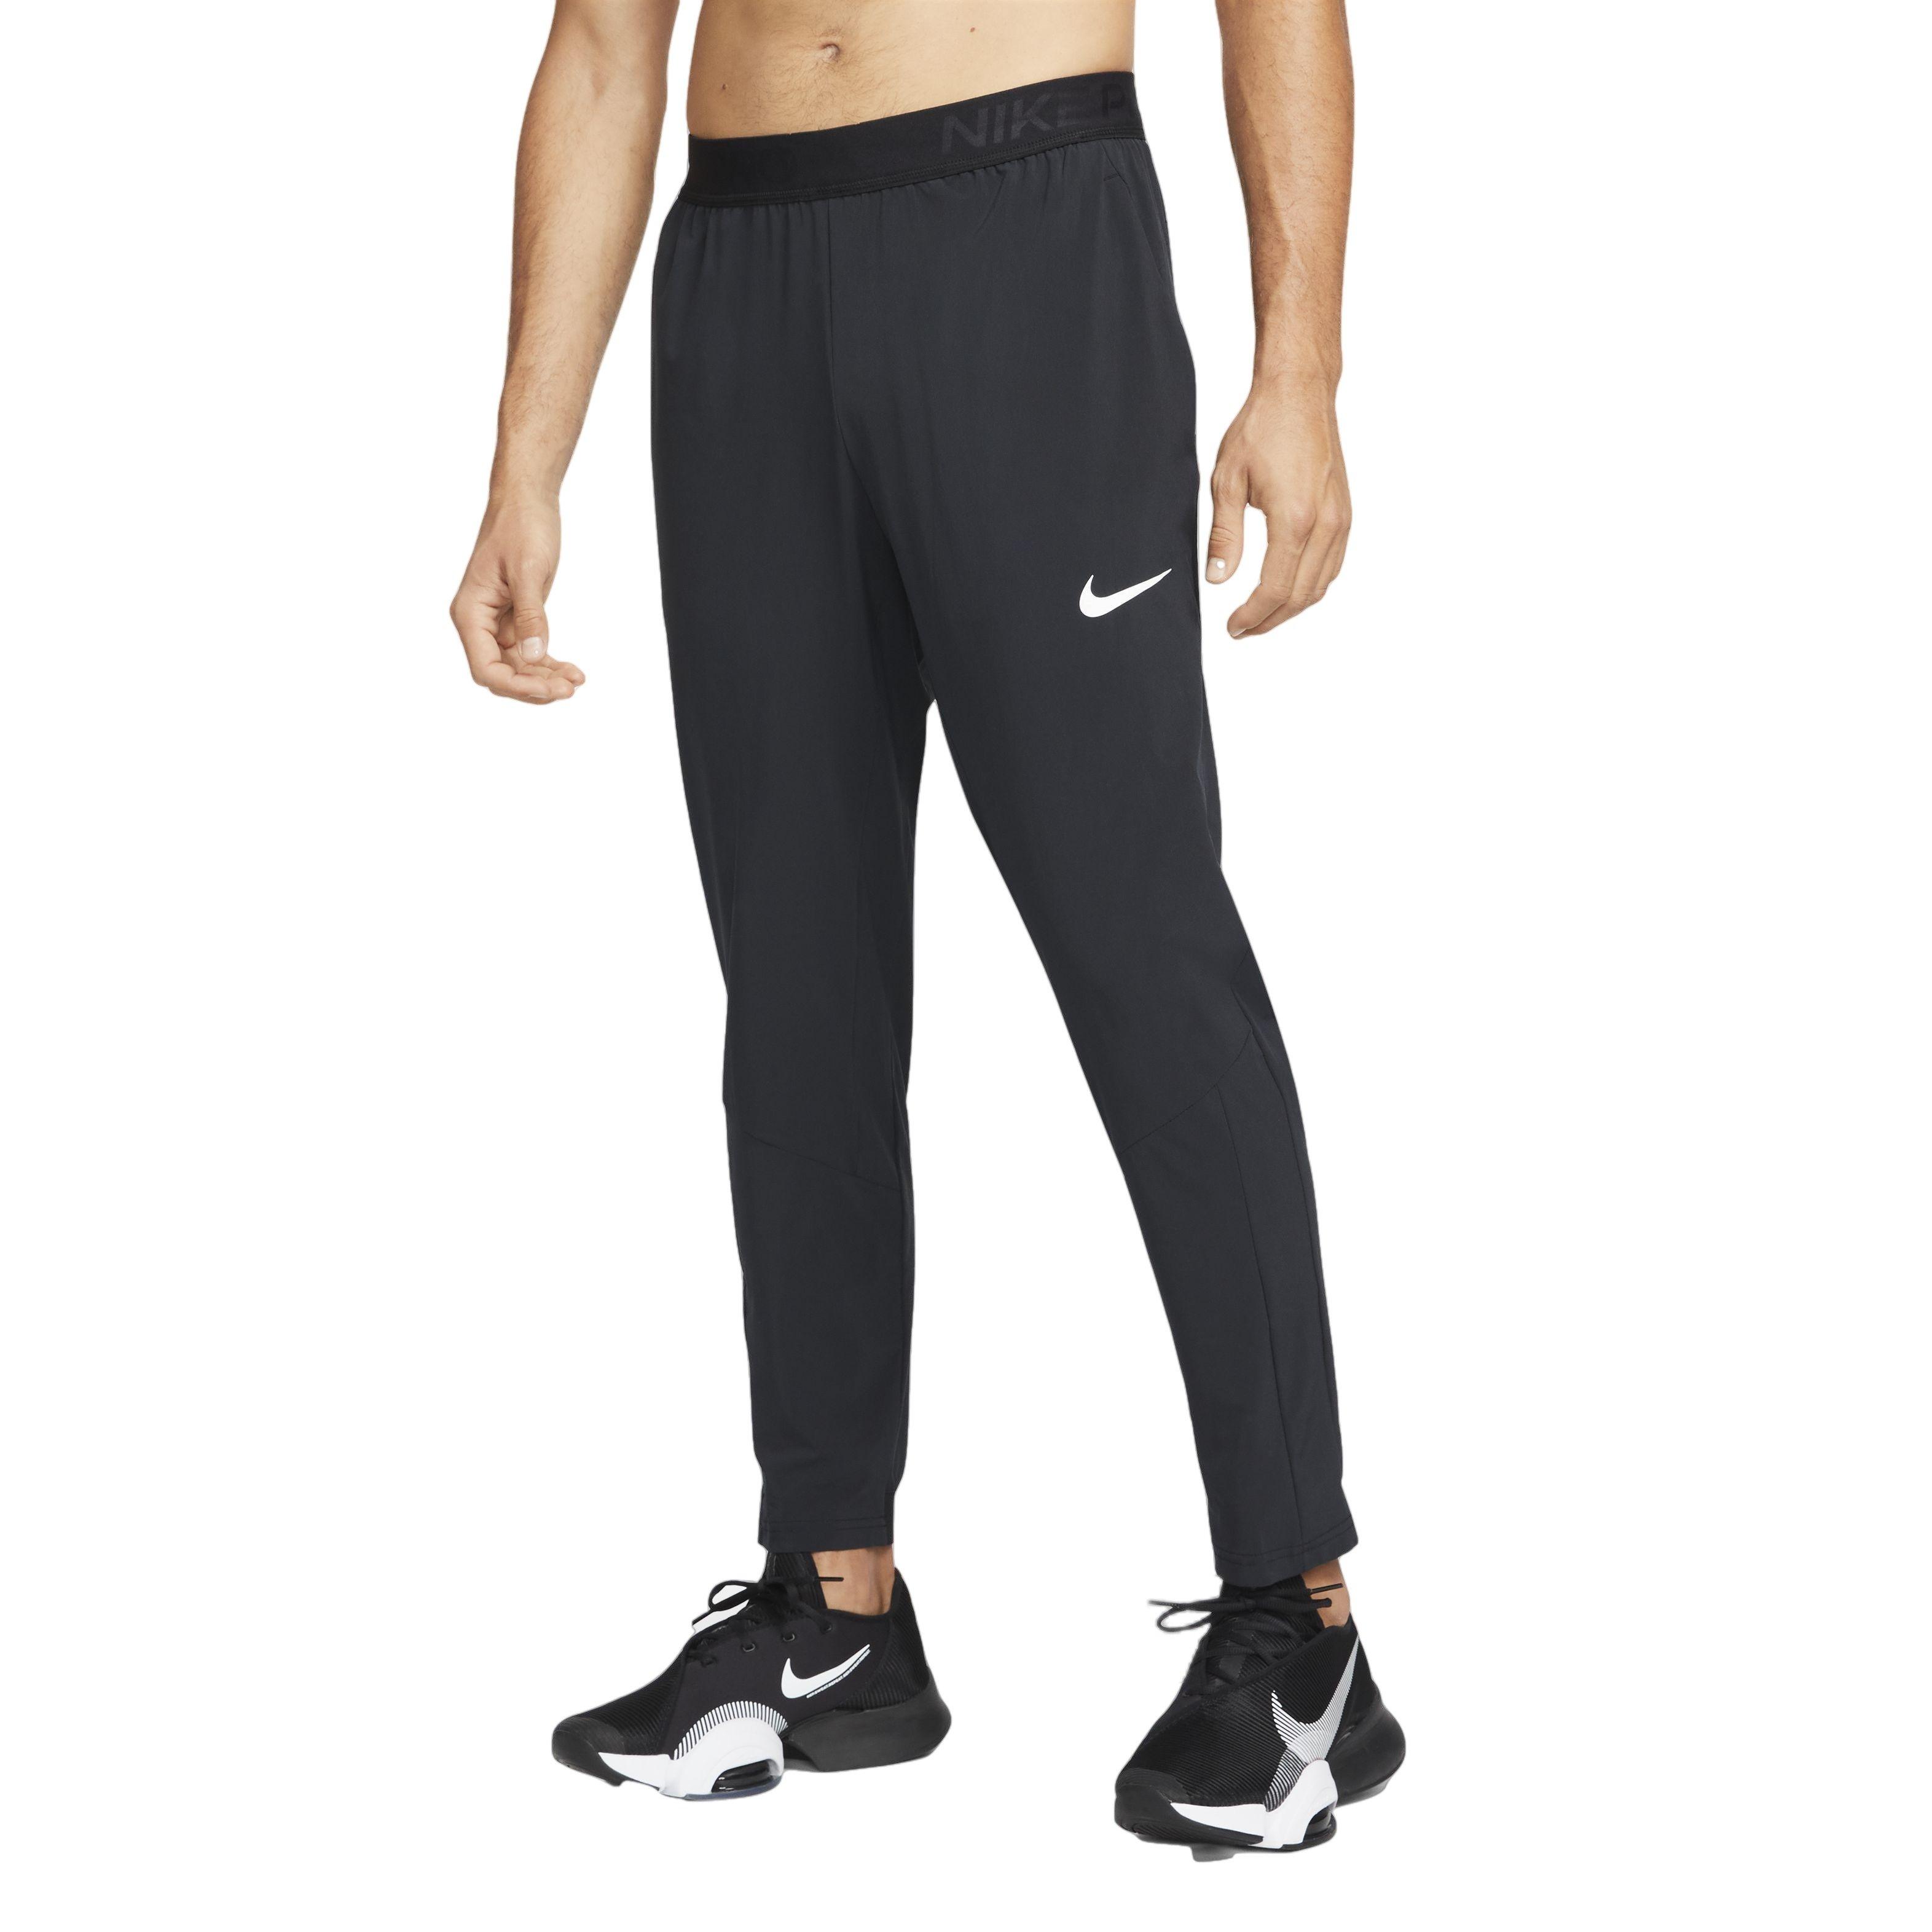 Nike Sweatpants Mens XL Dark Grey Baggy Fit Black Accents